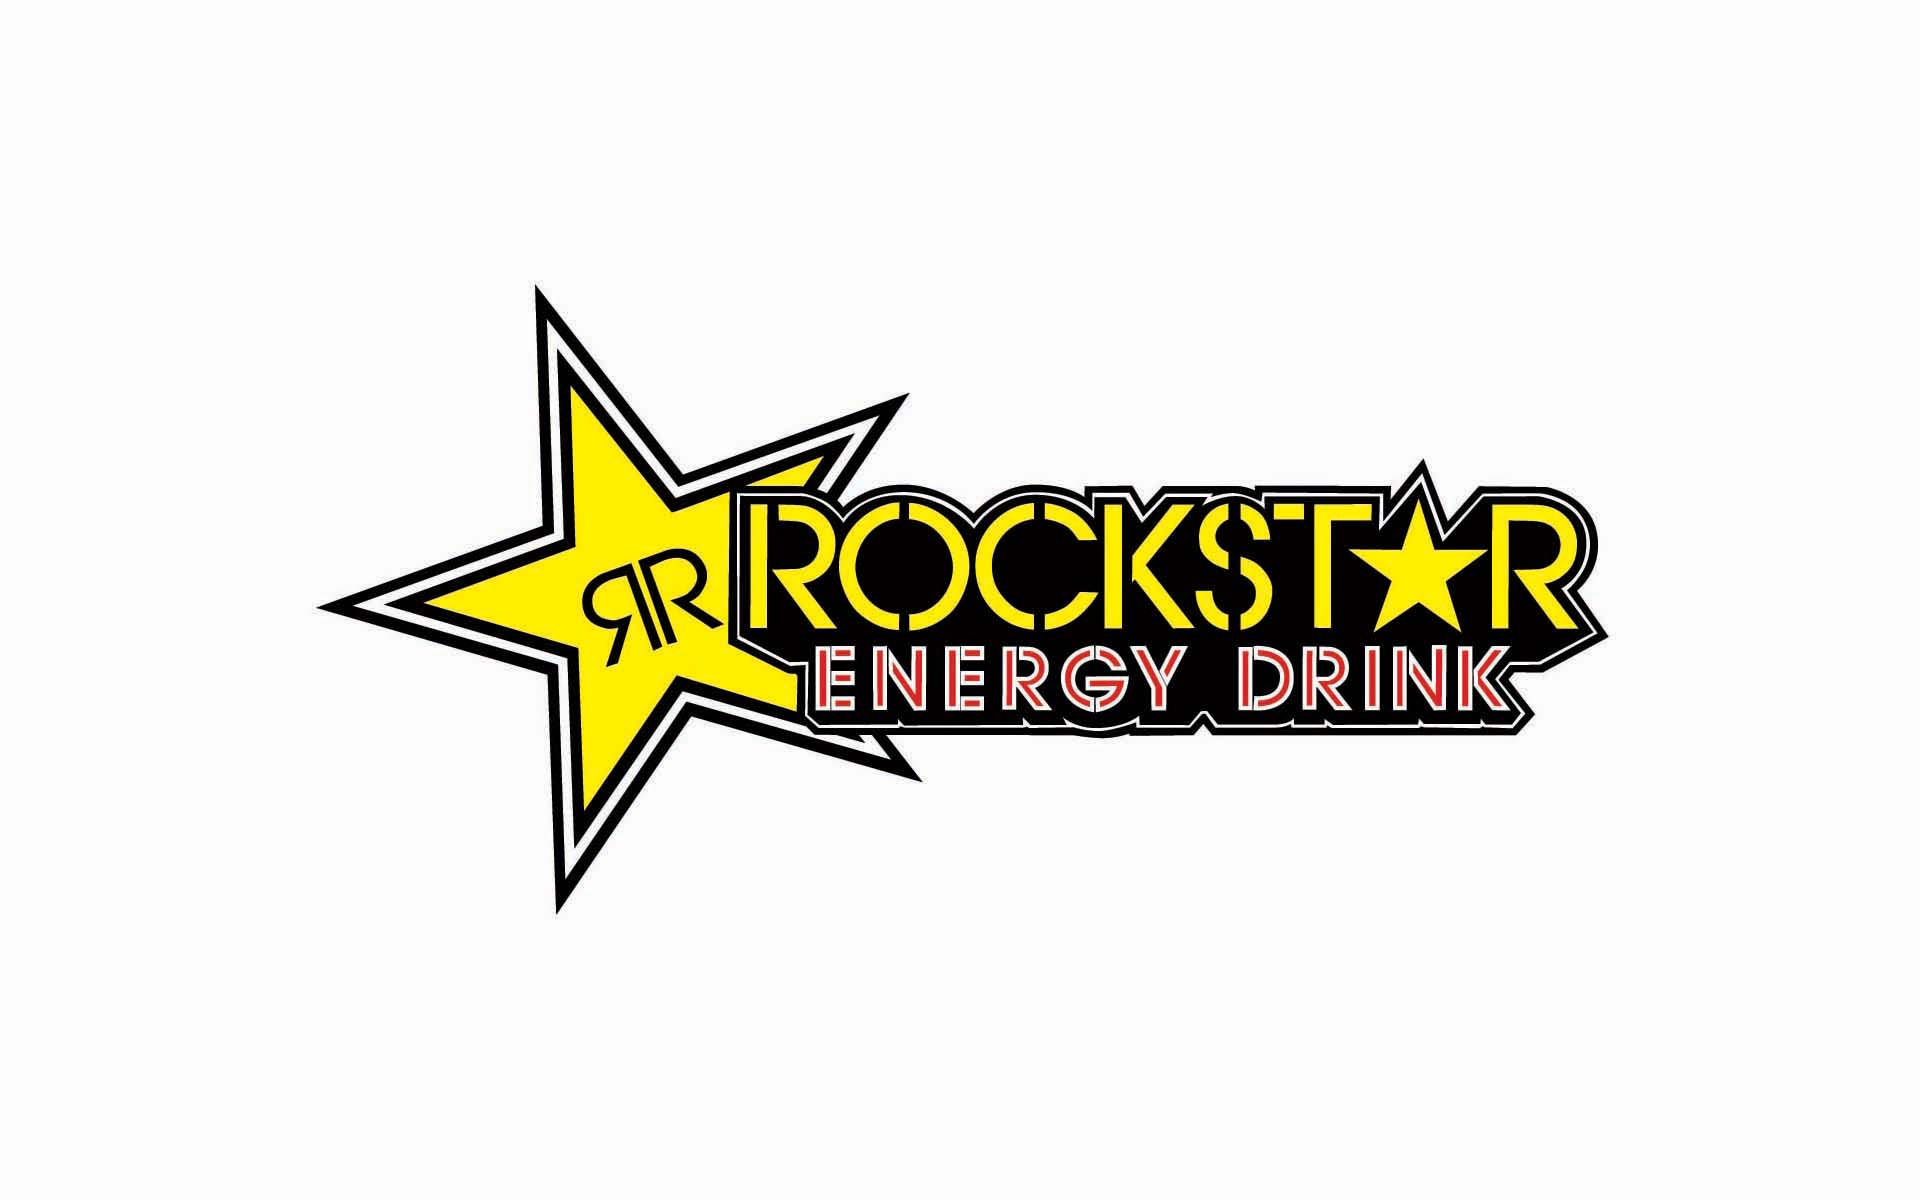 Rockstar Energy Drink Logo Wallpaper 58817 1920x1200 px